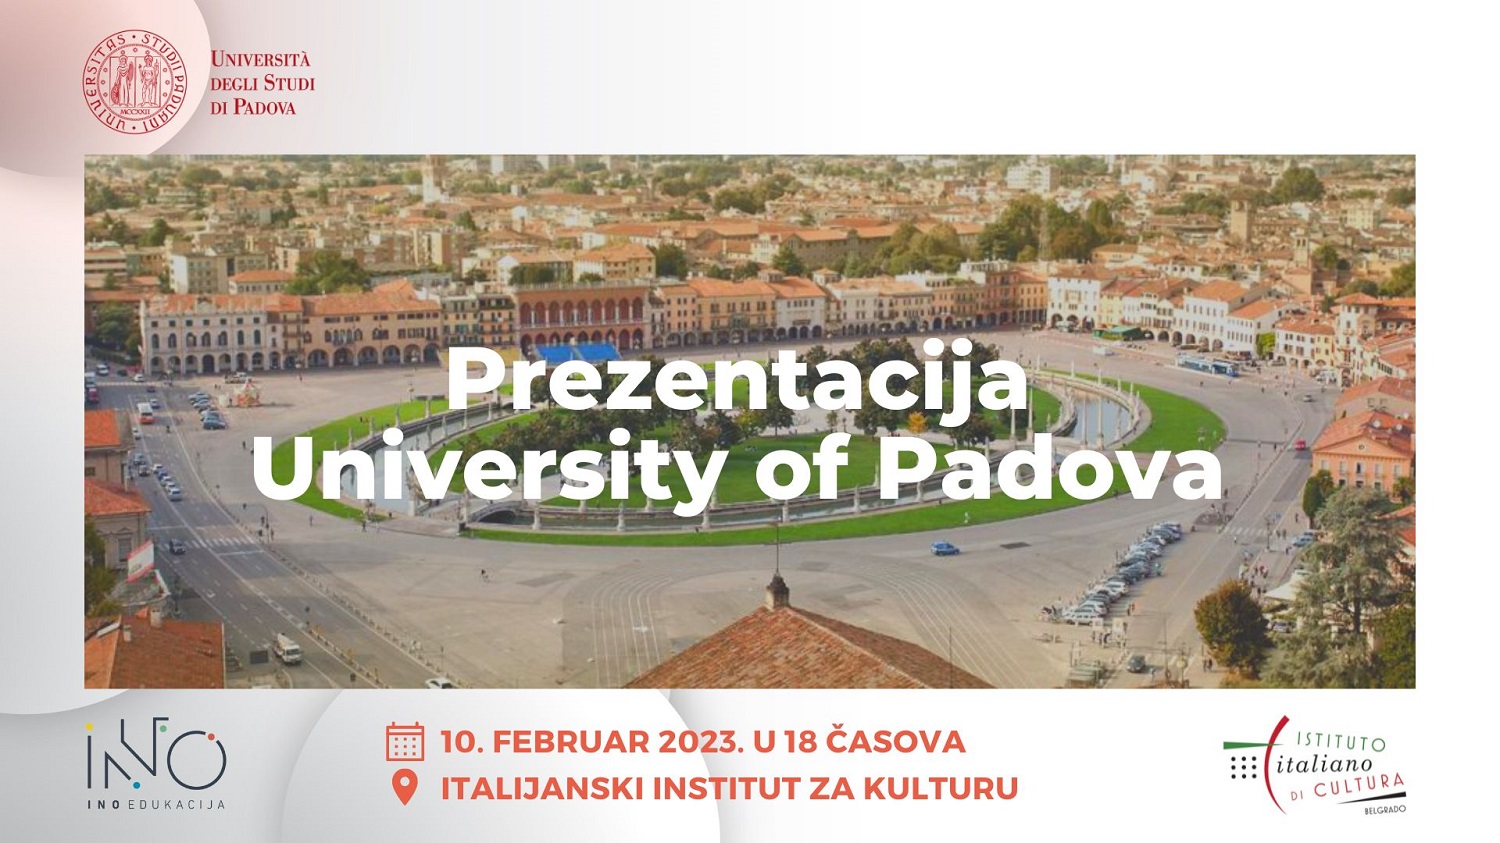 Prezentacija University of Padova – petak, 10. februar u Italijanskom institutu za kulturu u Beogradu